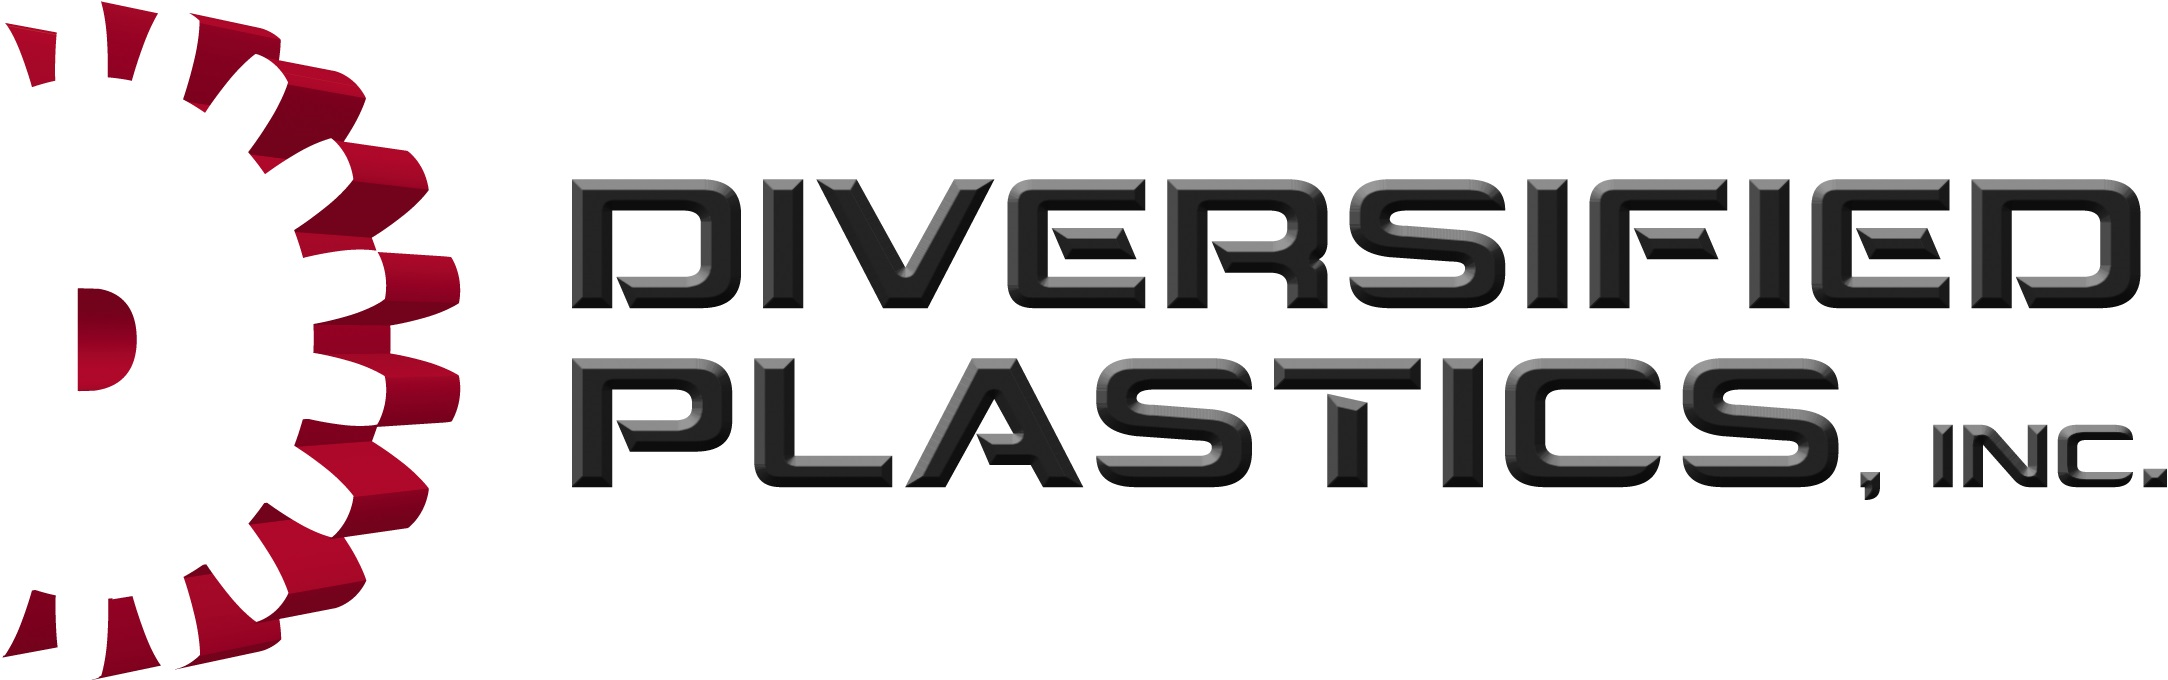 Diversified Plastics logo